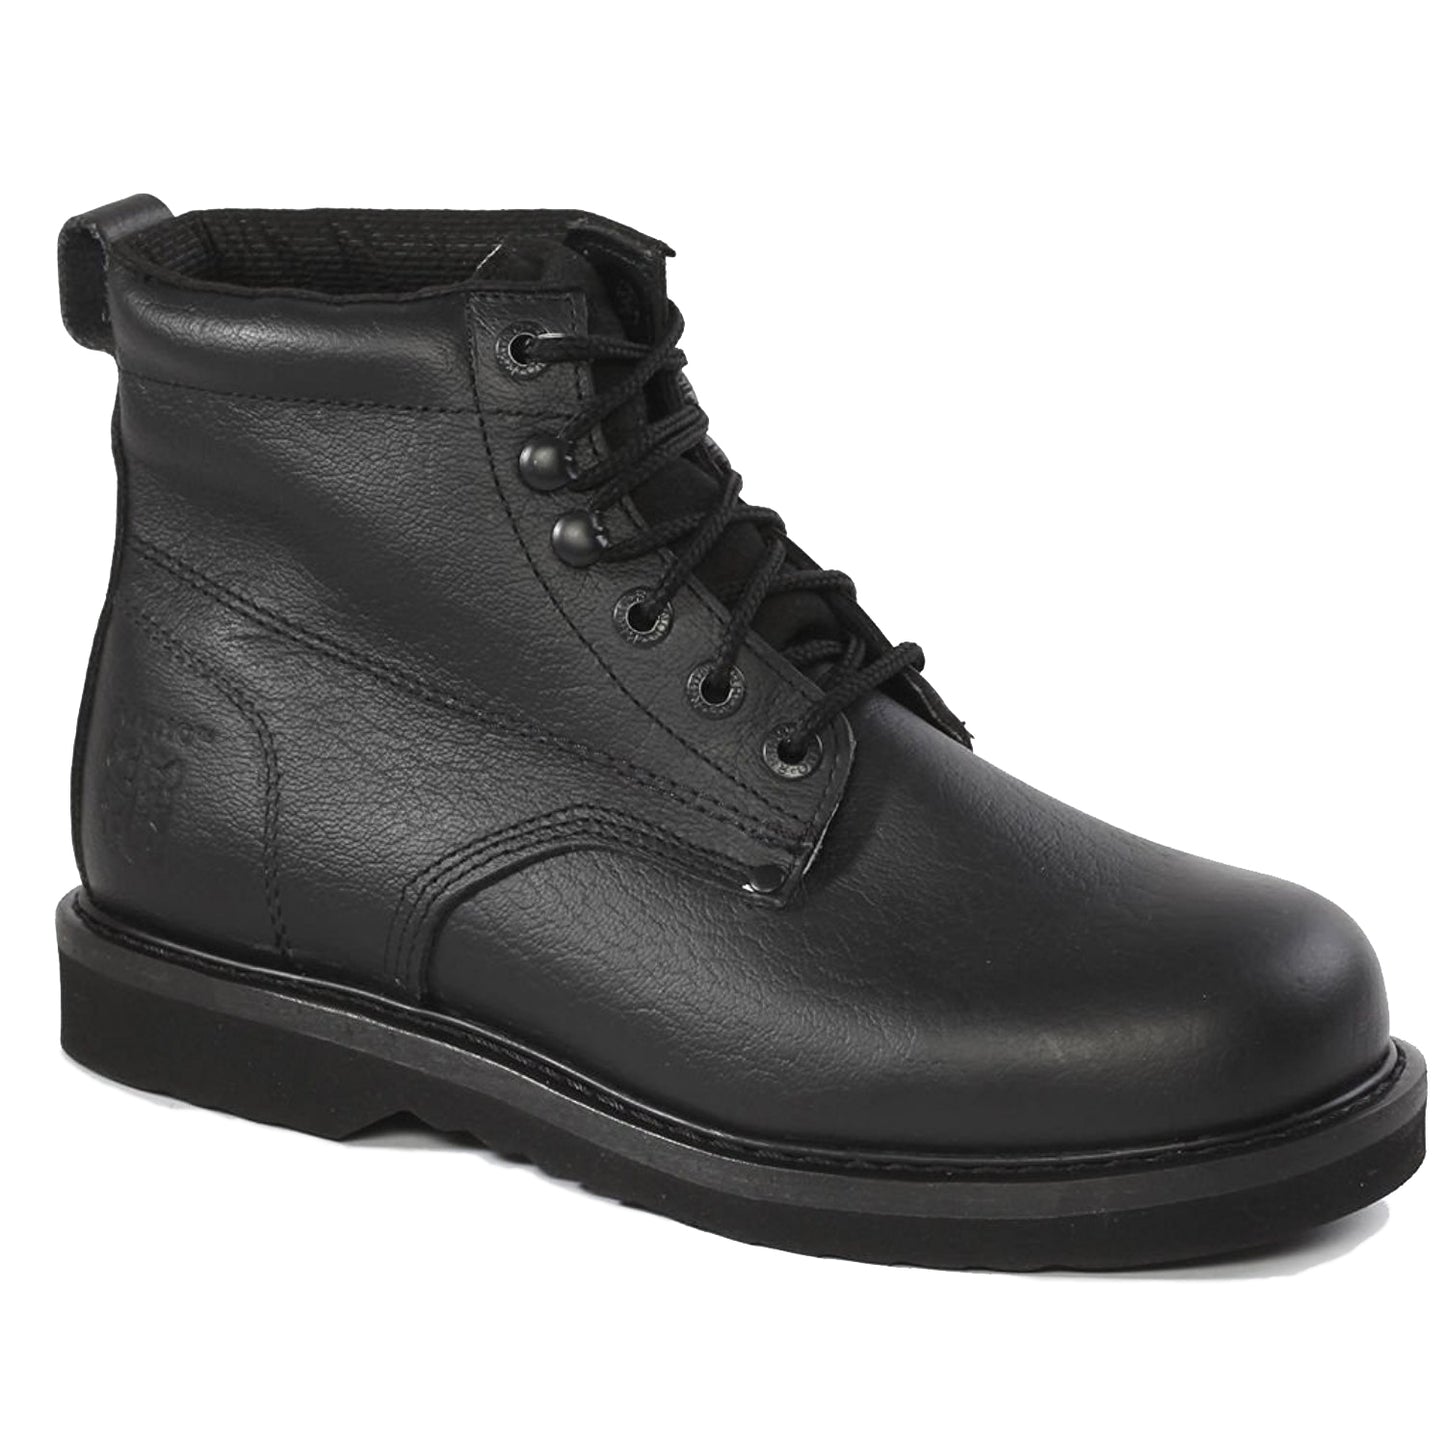 Rhino Men's 61M216 inch Plain toe Leather Work Boot - Black